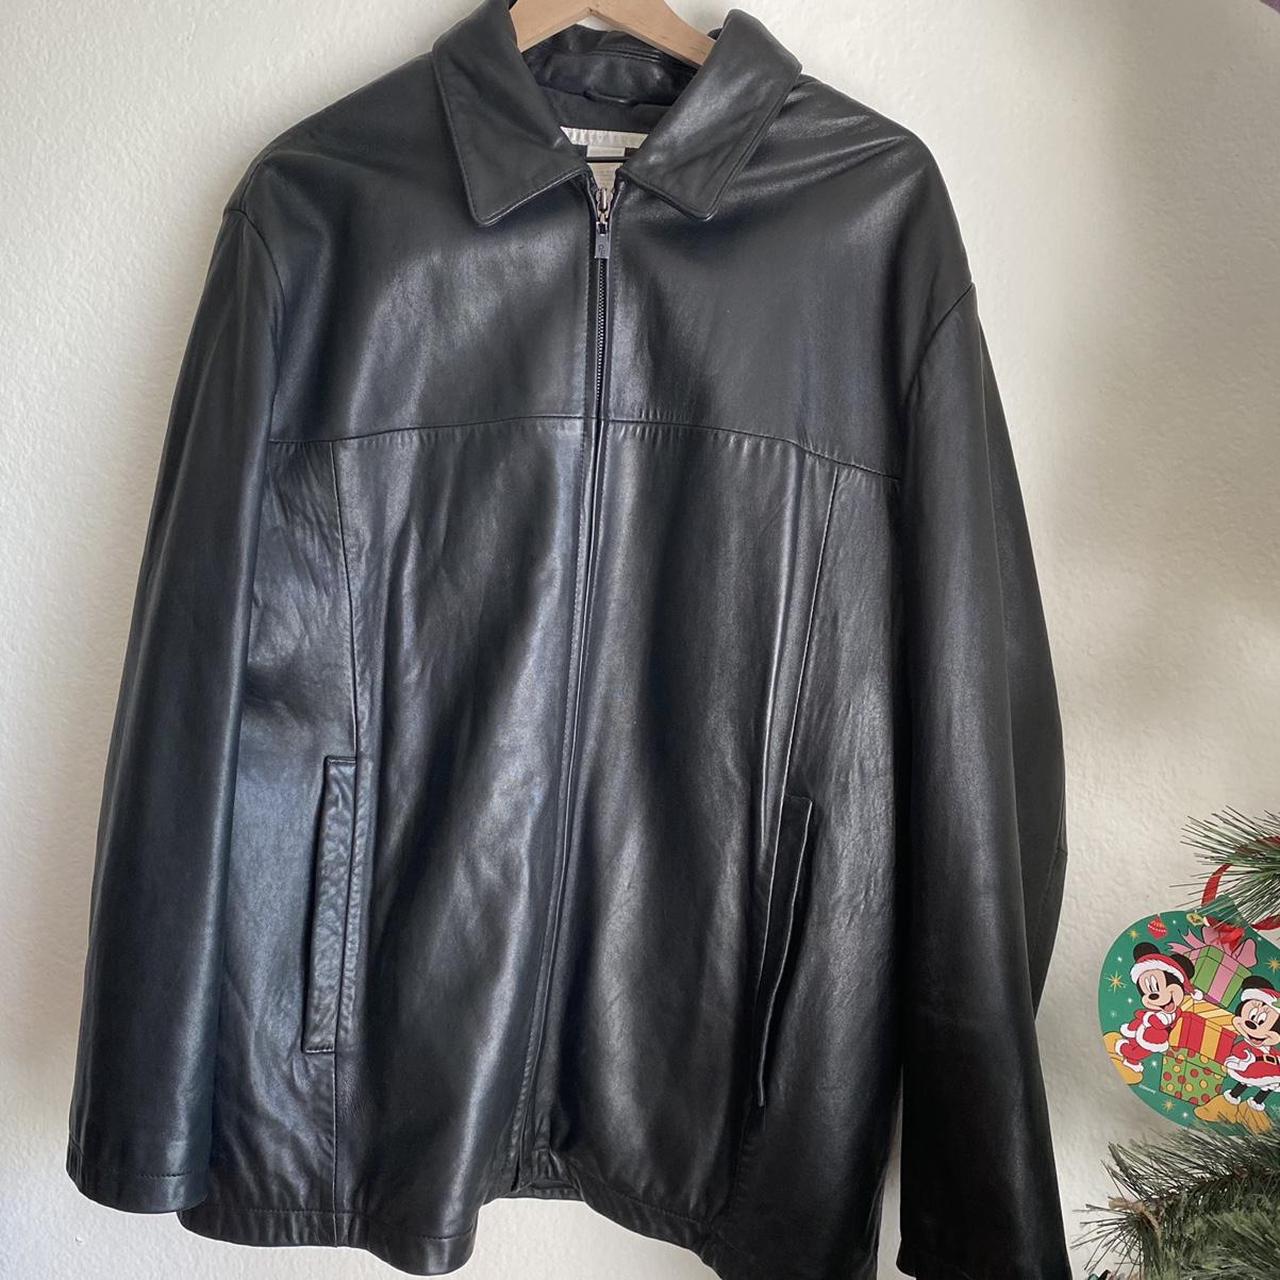 Perry Ellis Leather Jacket Vintage 90s gem. Stay... - Depop